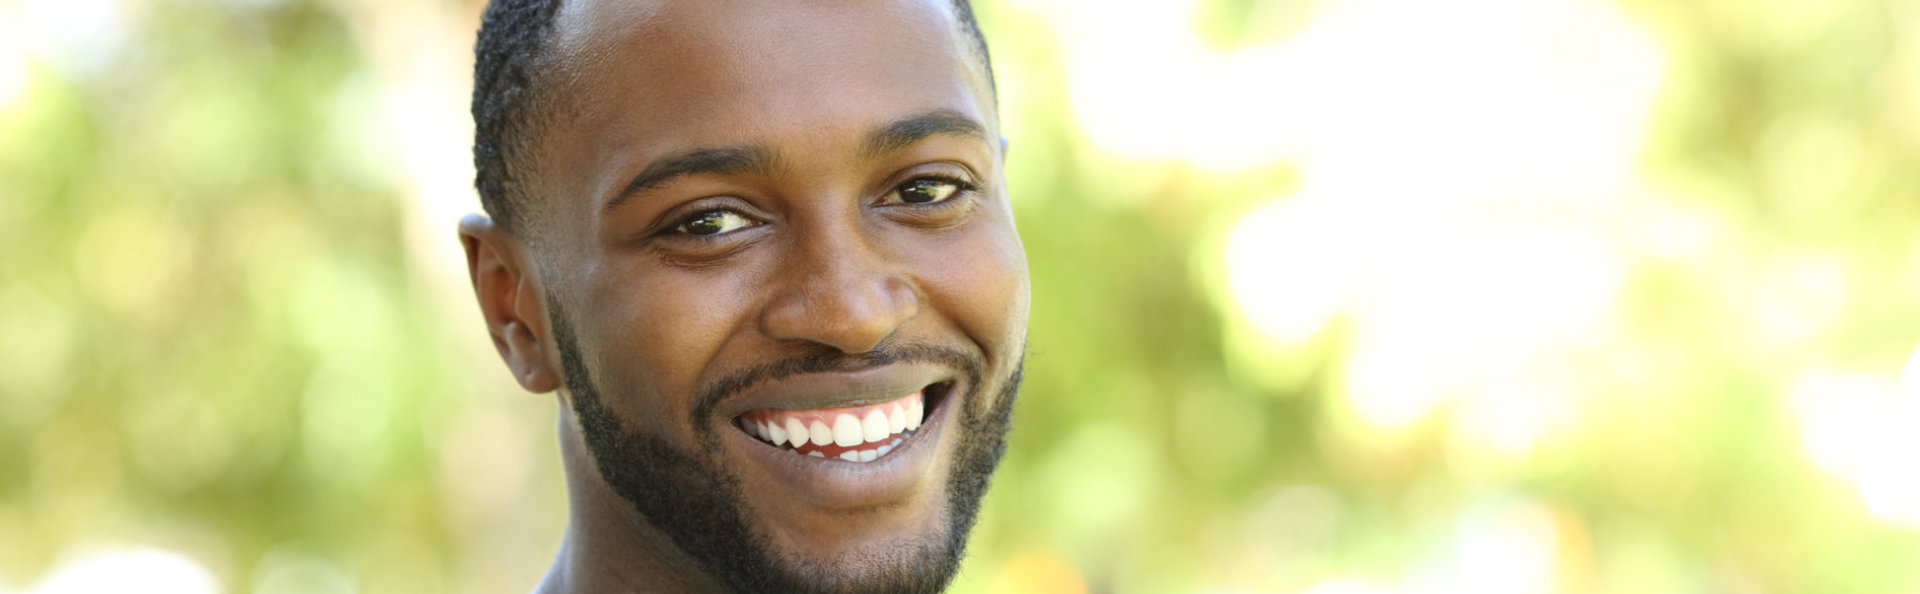 A man smiling after dental bridges treatments